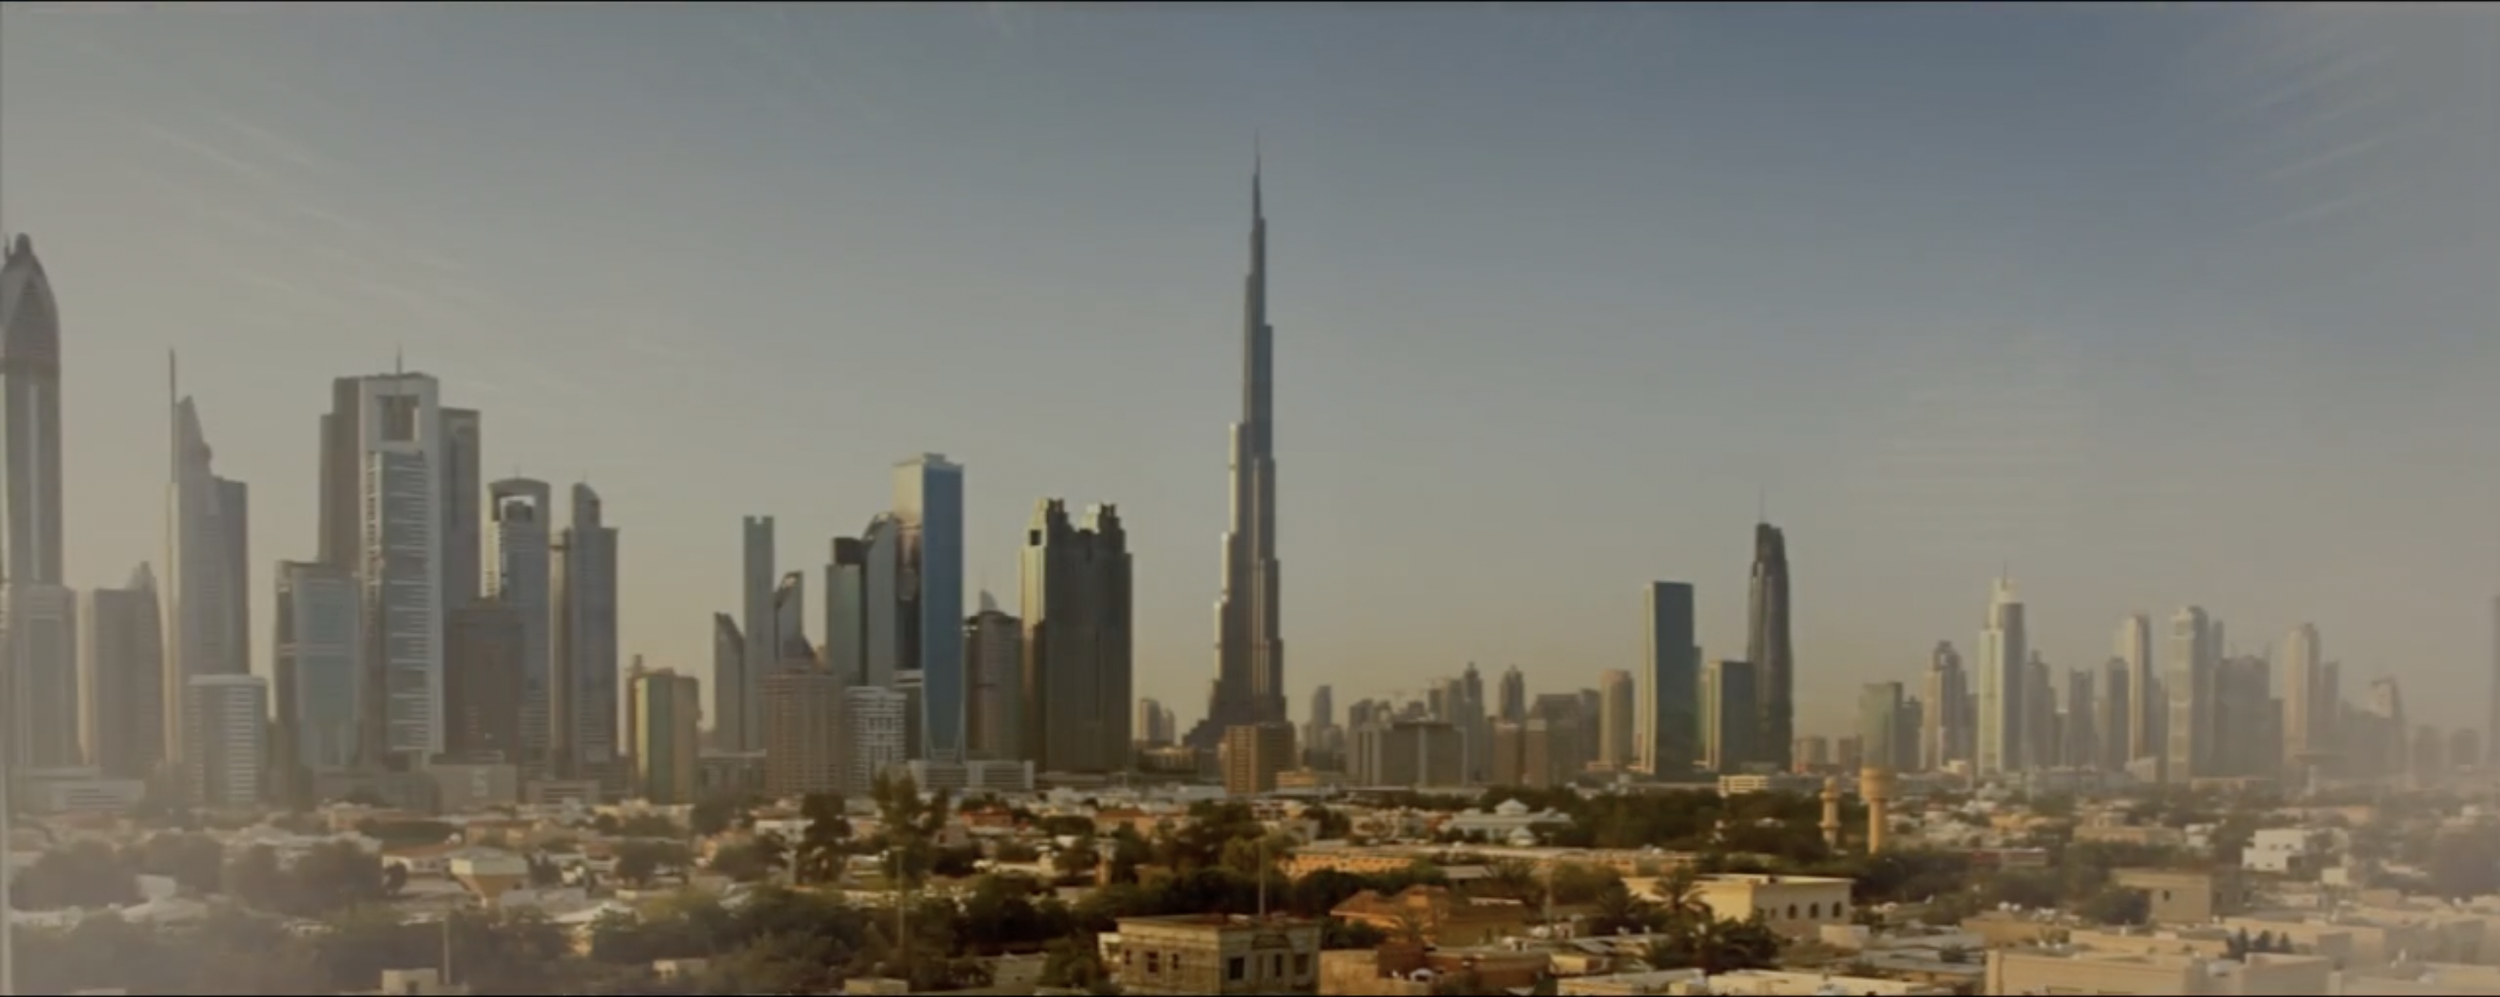 At the Top, Burj Khalifa, Dubai